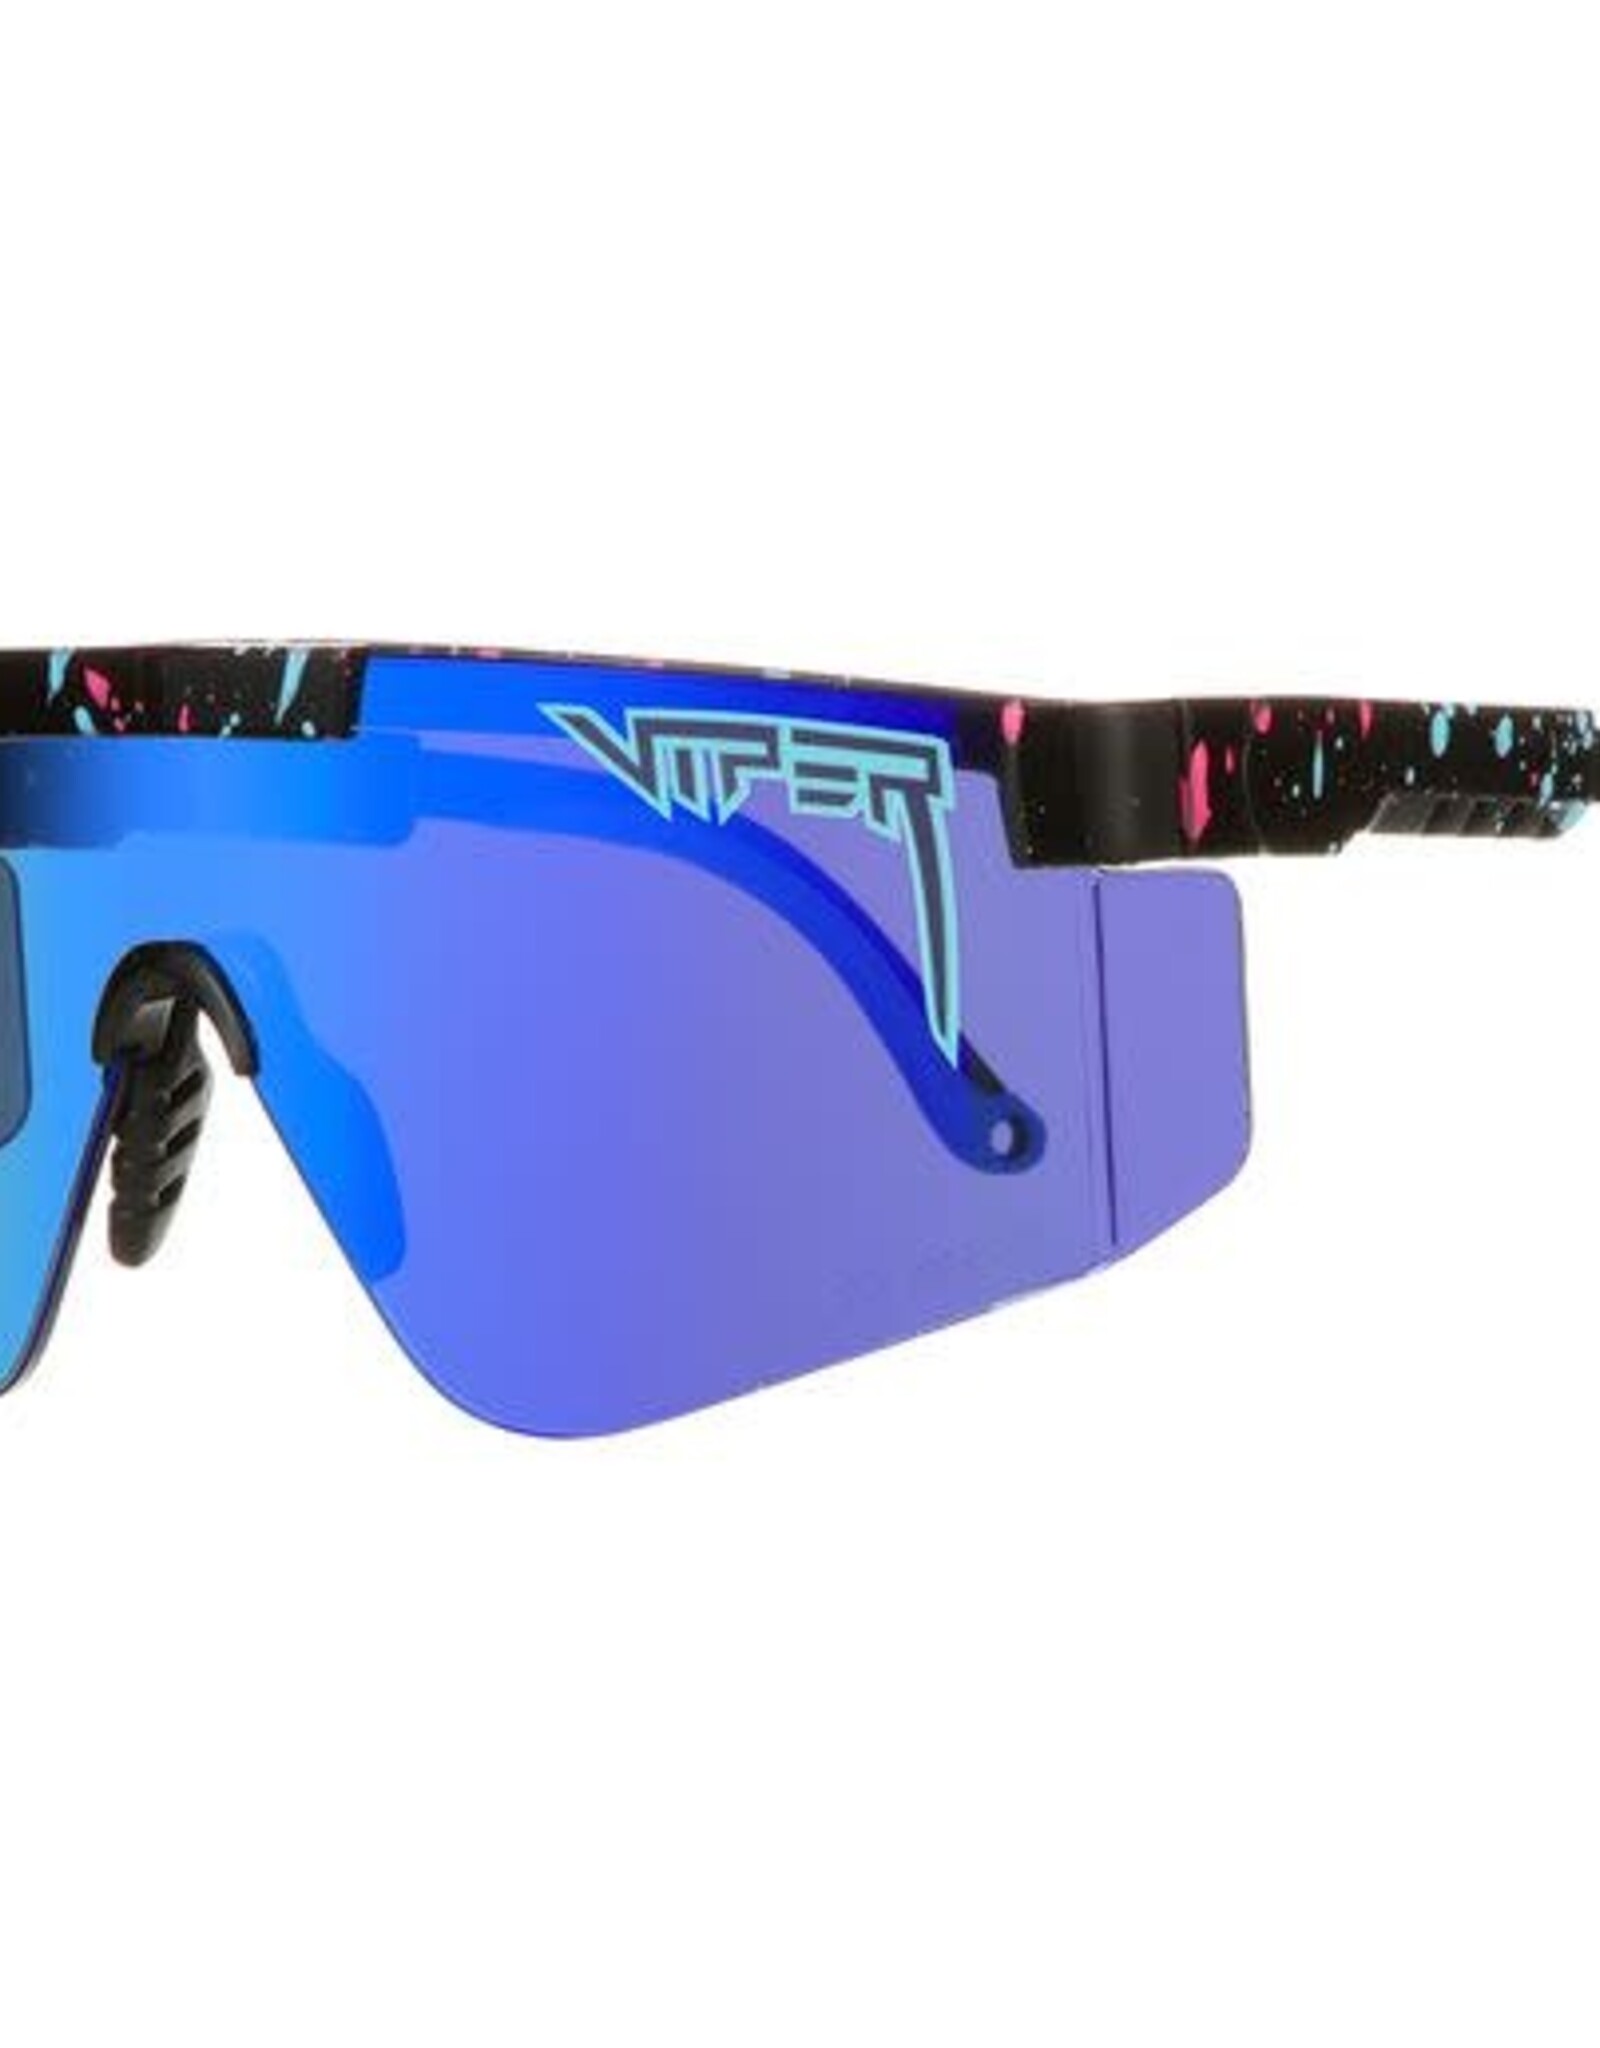 Pit Viper 2000s Sunglasses